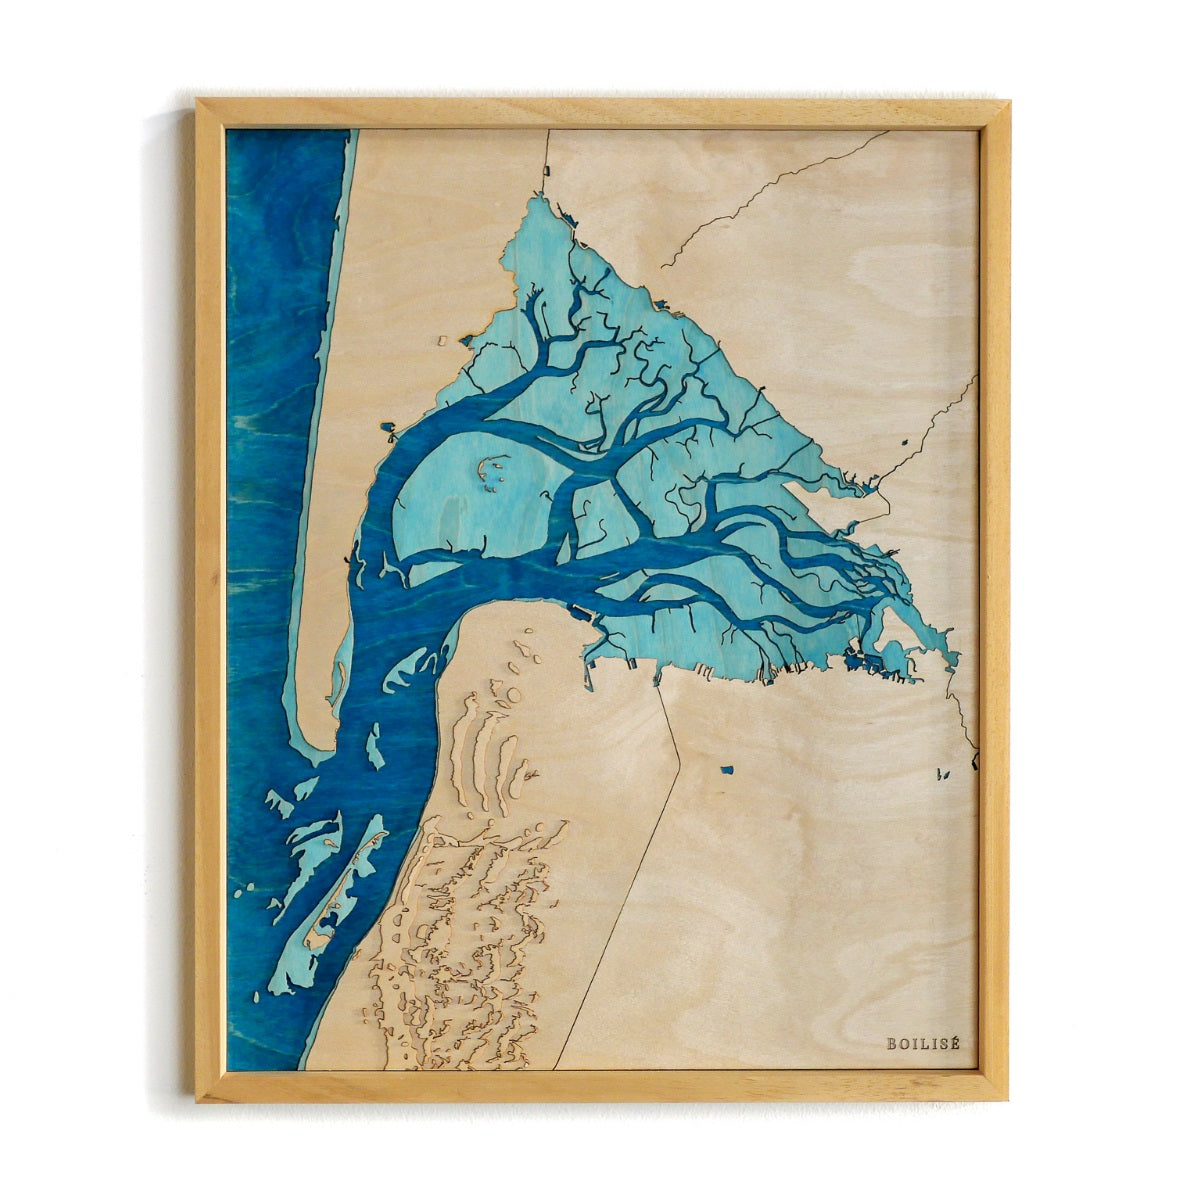 Tableau du bassin d'Arcachon, cadre standard brut et océan bleu marine